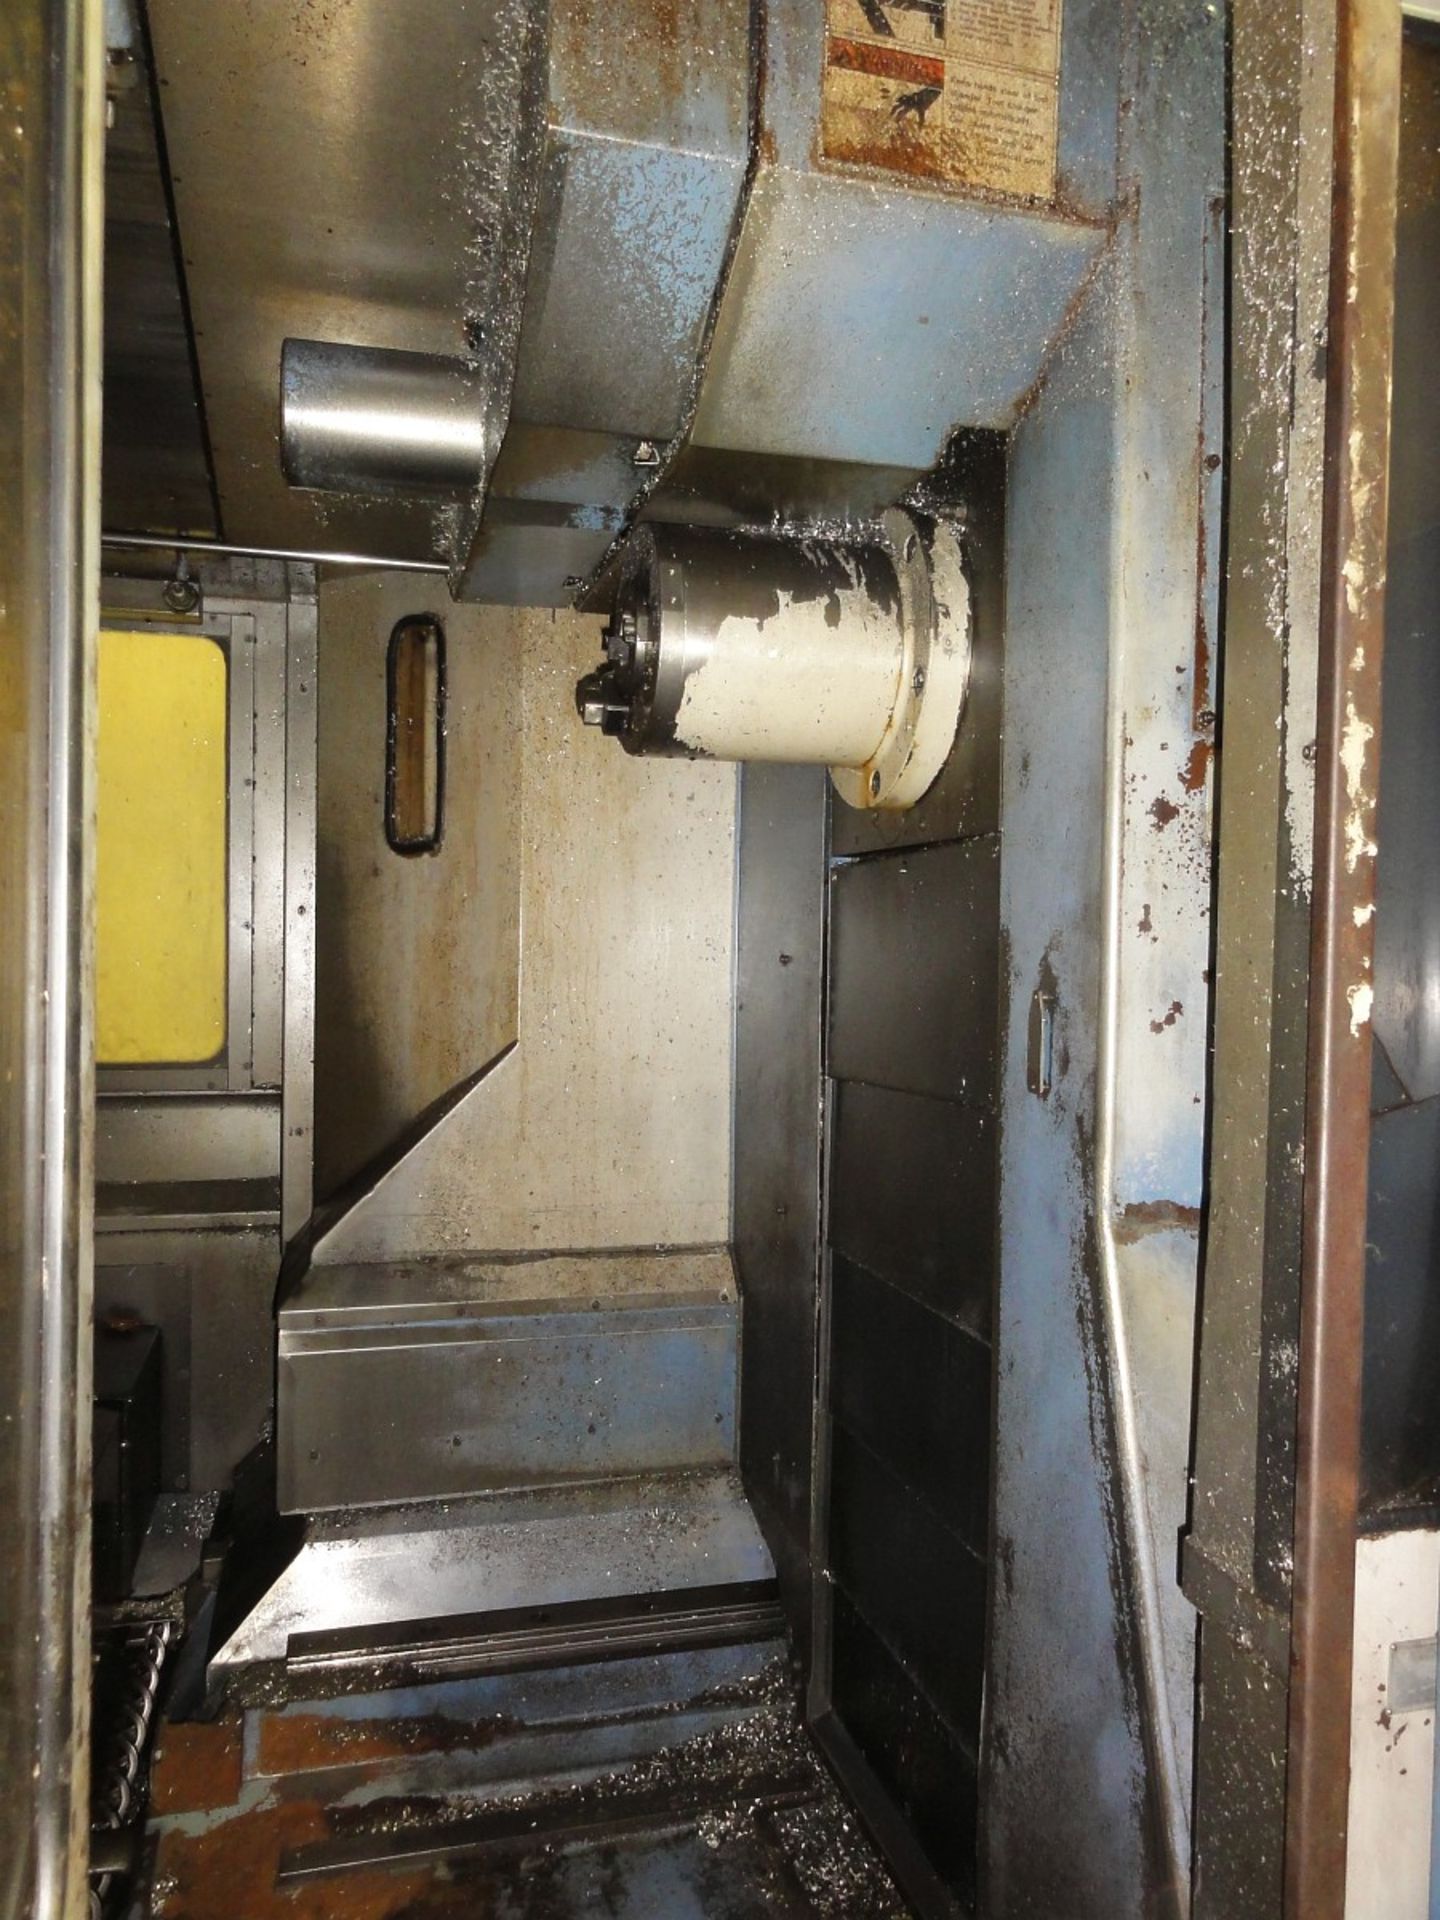 Mazak Mdl H630-APC CNC Horizontal Mill, w/ 6-pallet shuttle, - Image 5 of 11